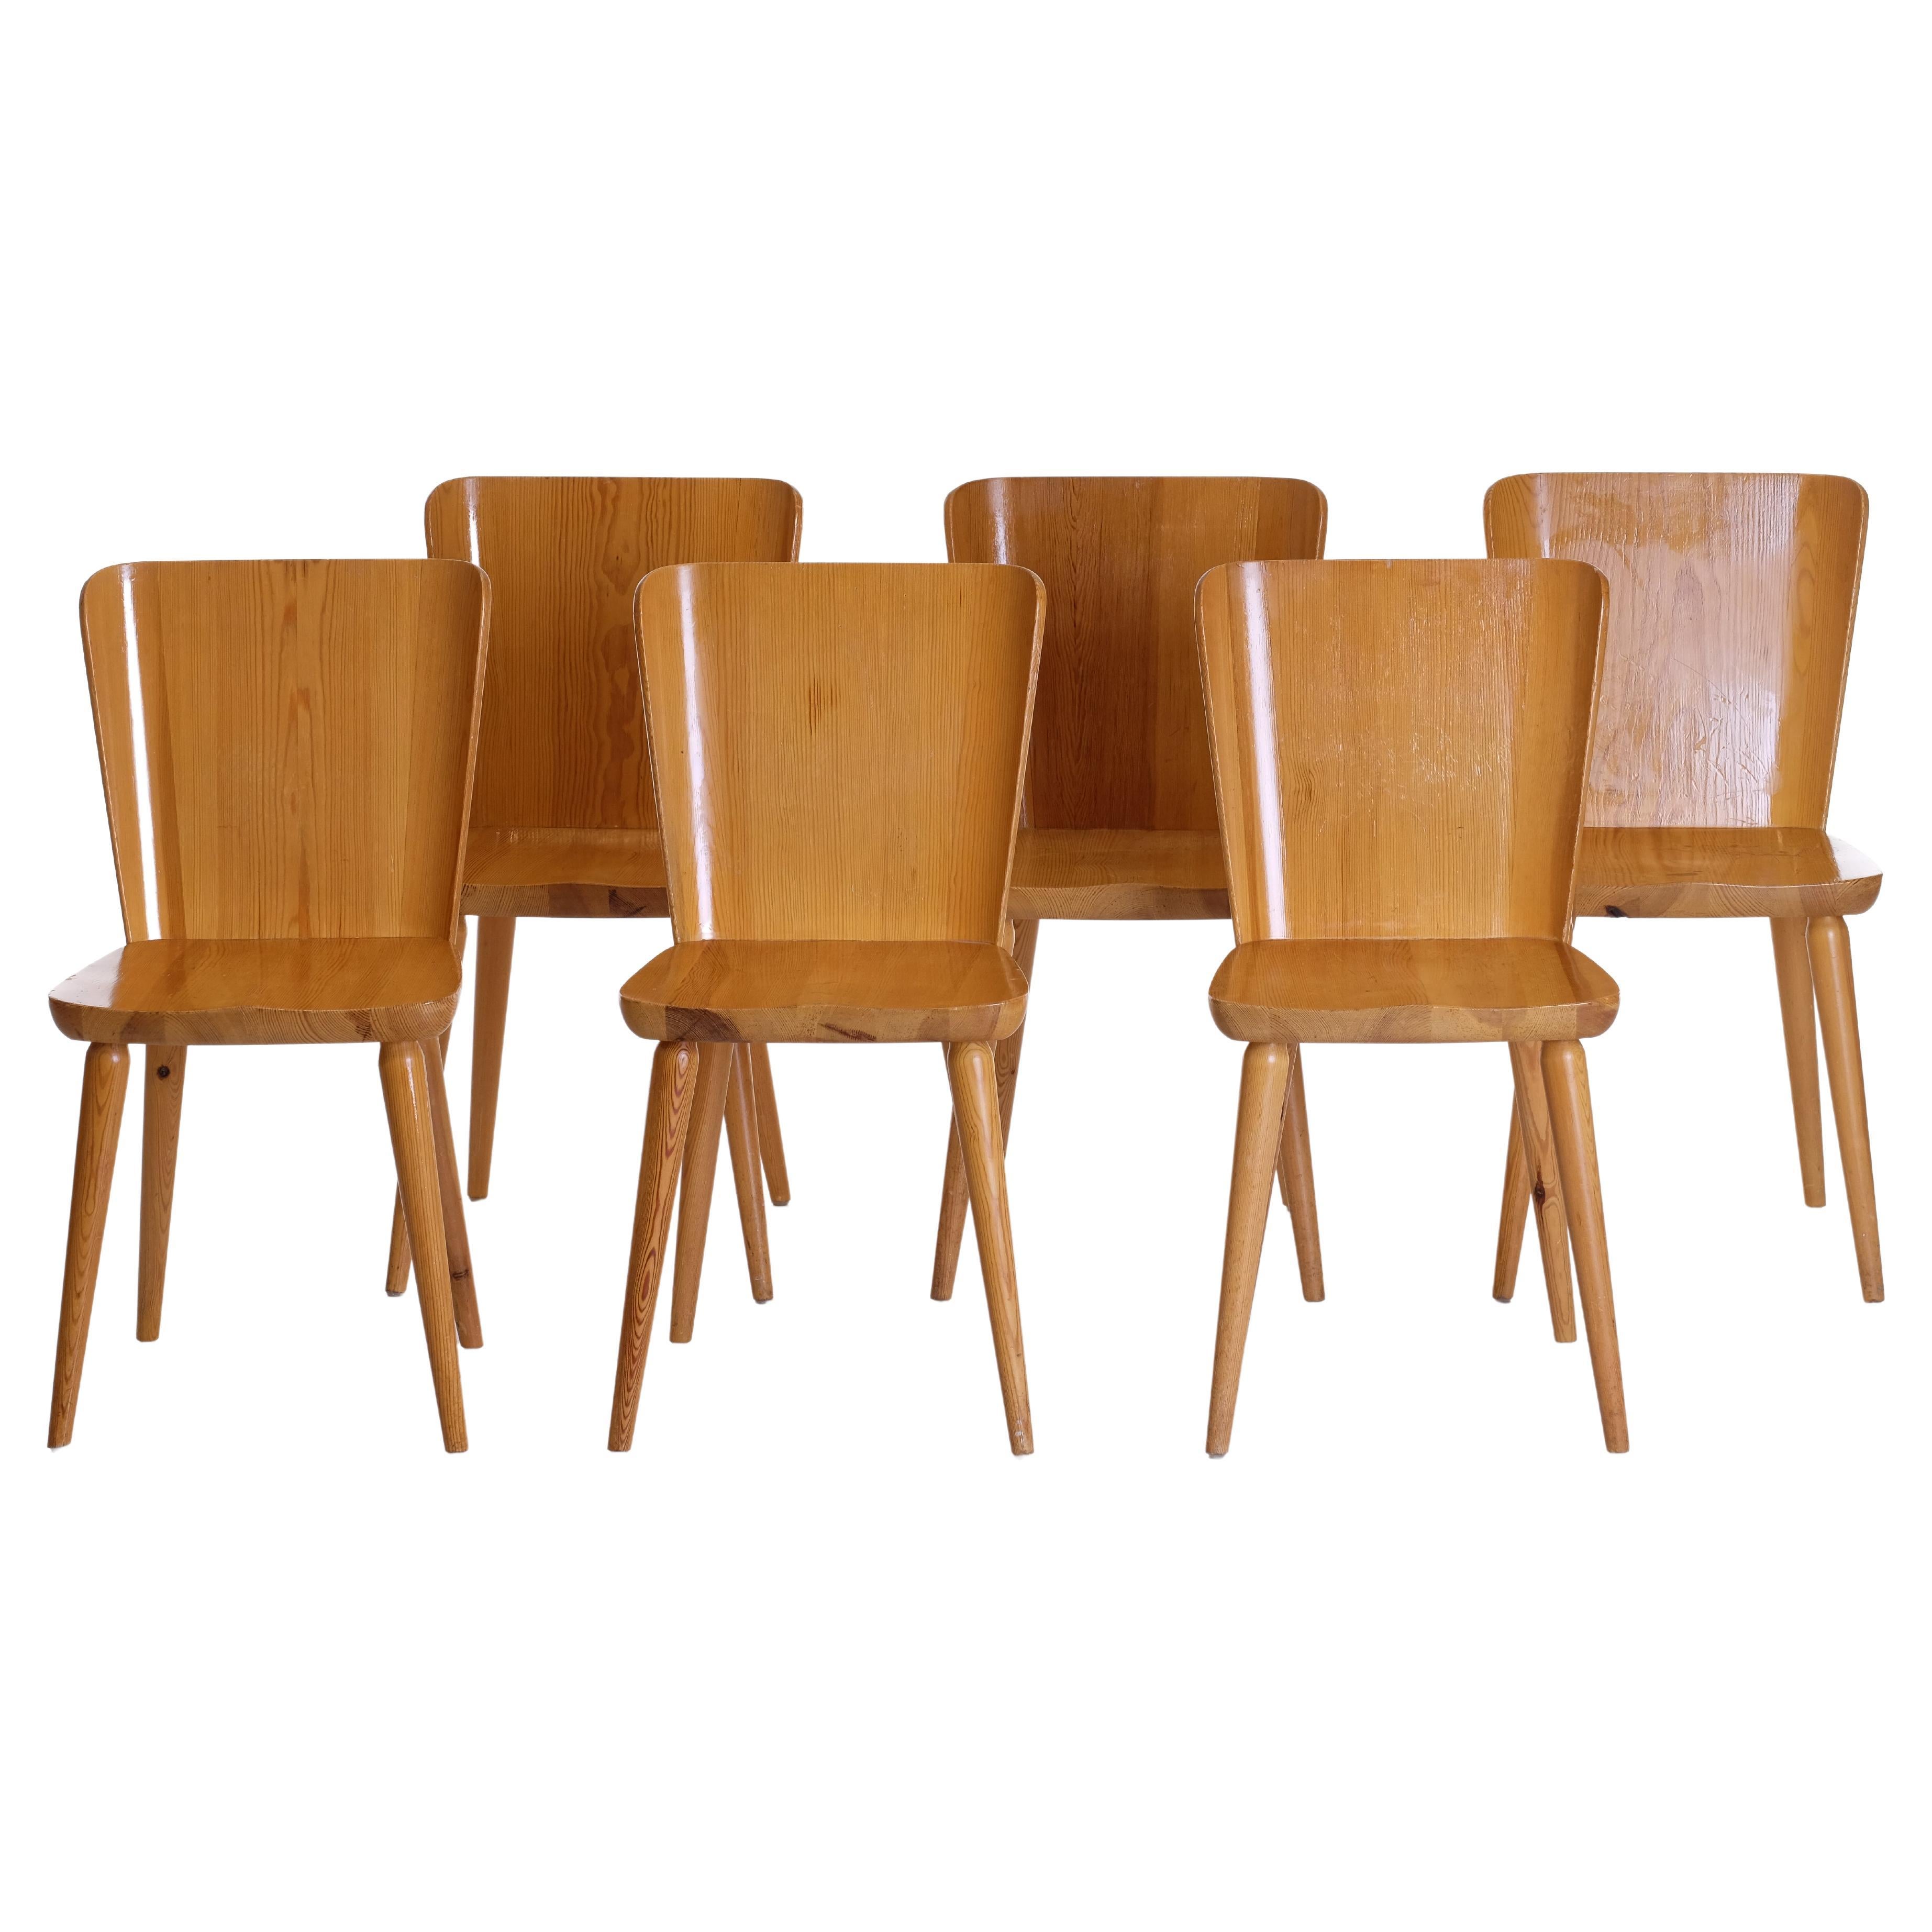 Set of 6 Swedish Pine Chairs by Göran Malmvall, Svensk Fur, 1960s For Sale